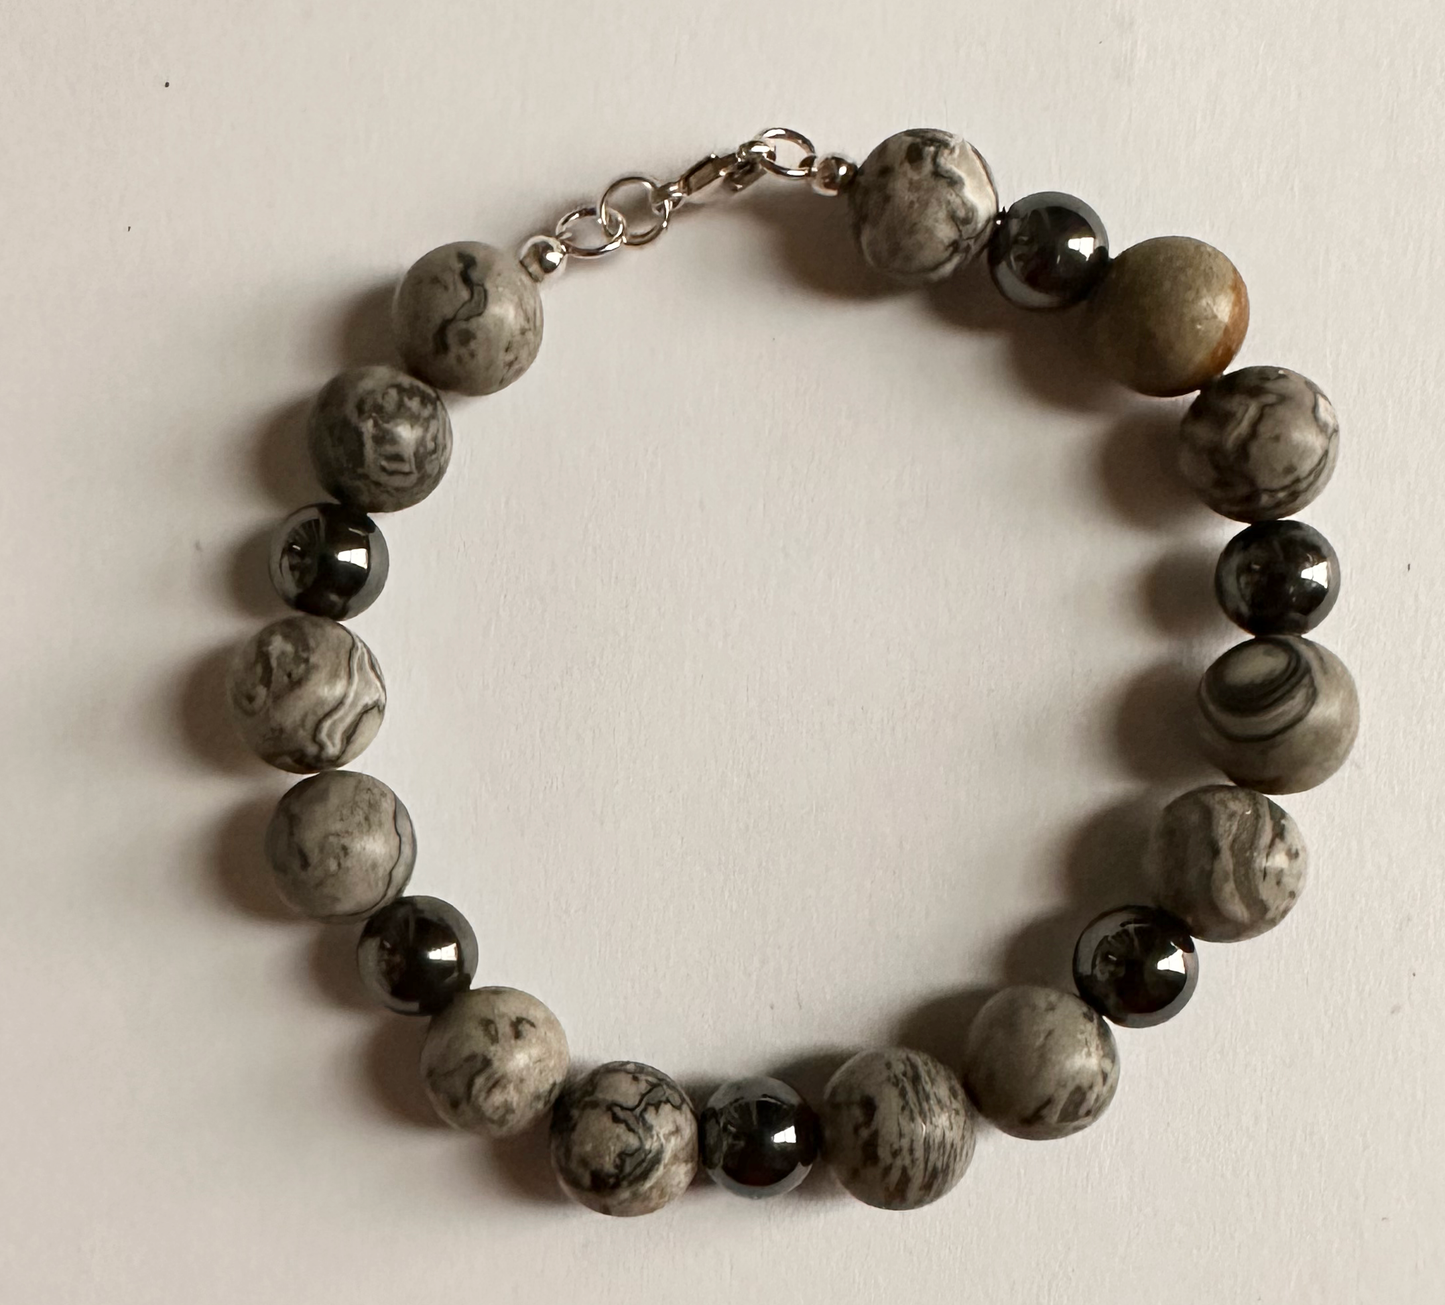 Silver Leaf Jasper Beads with Hematite Accent Beads Bracelet